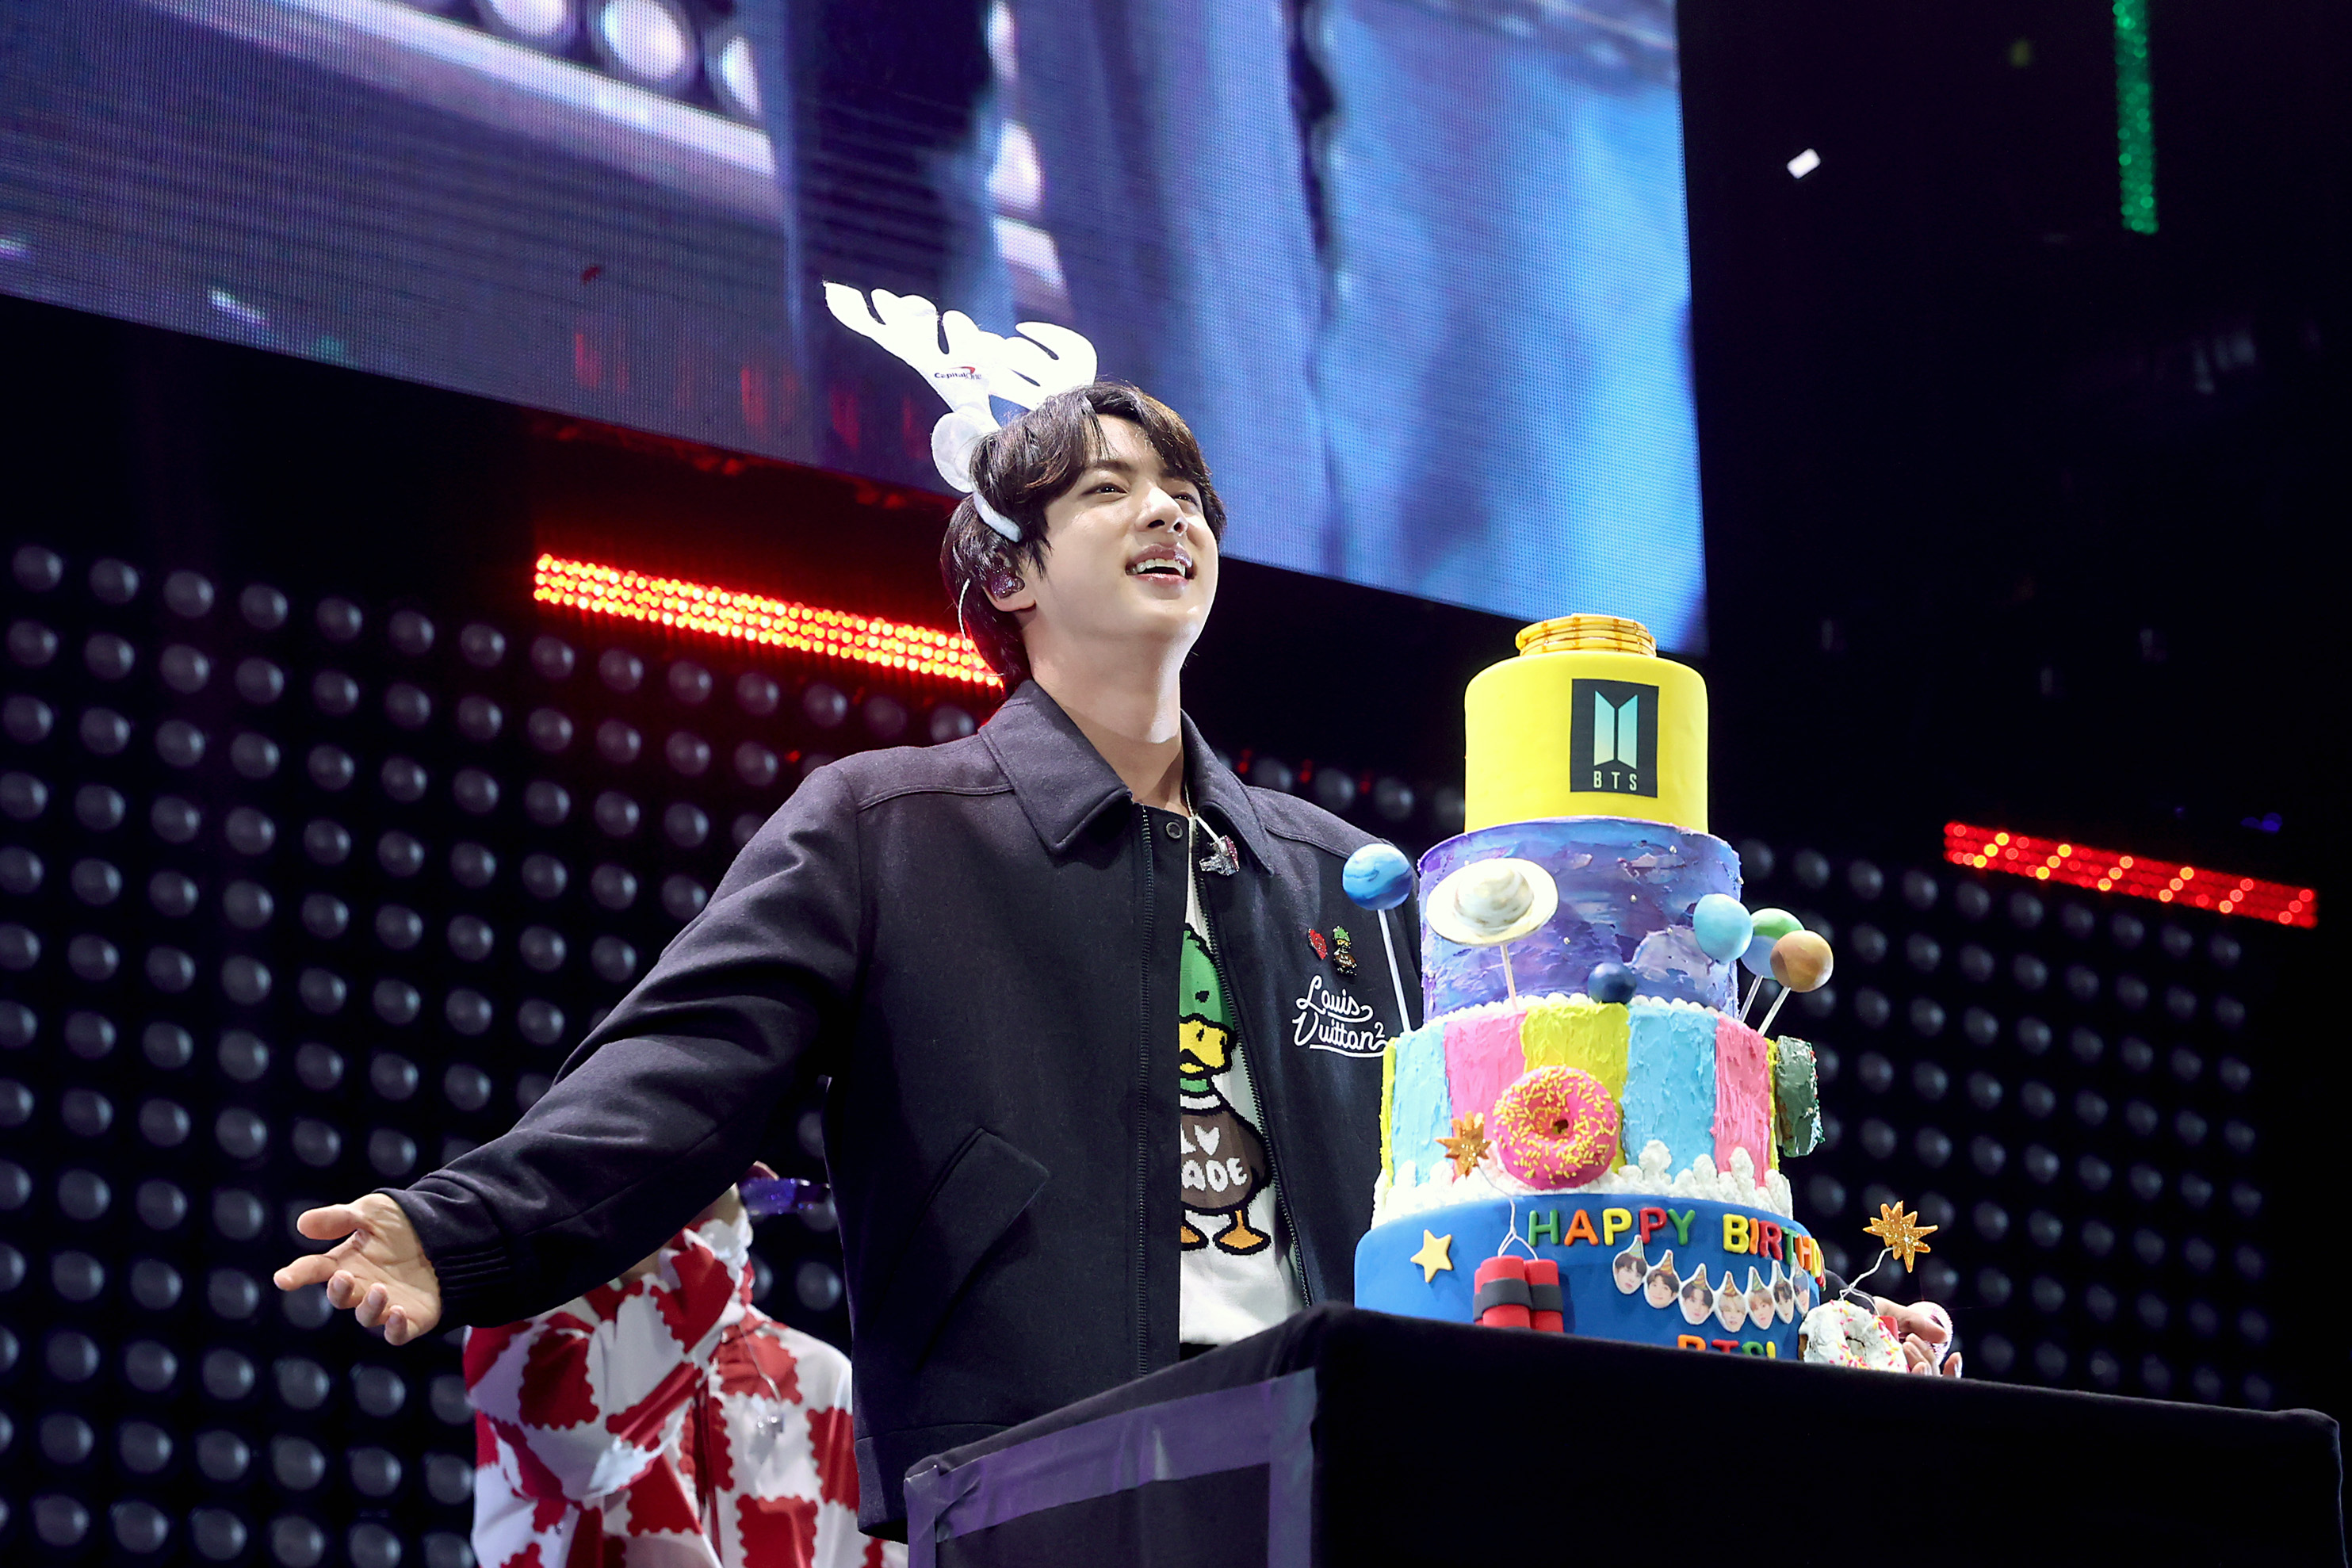 Jin of BTS celebrates his birthday during iHeartRadio 102.7 KIIS FM's Jingle Ball 2021